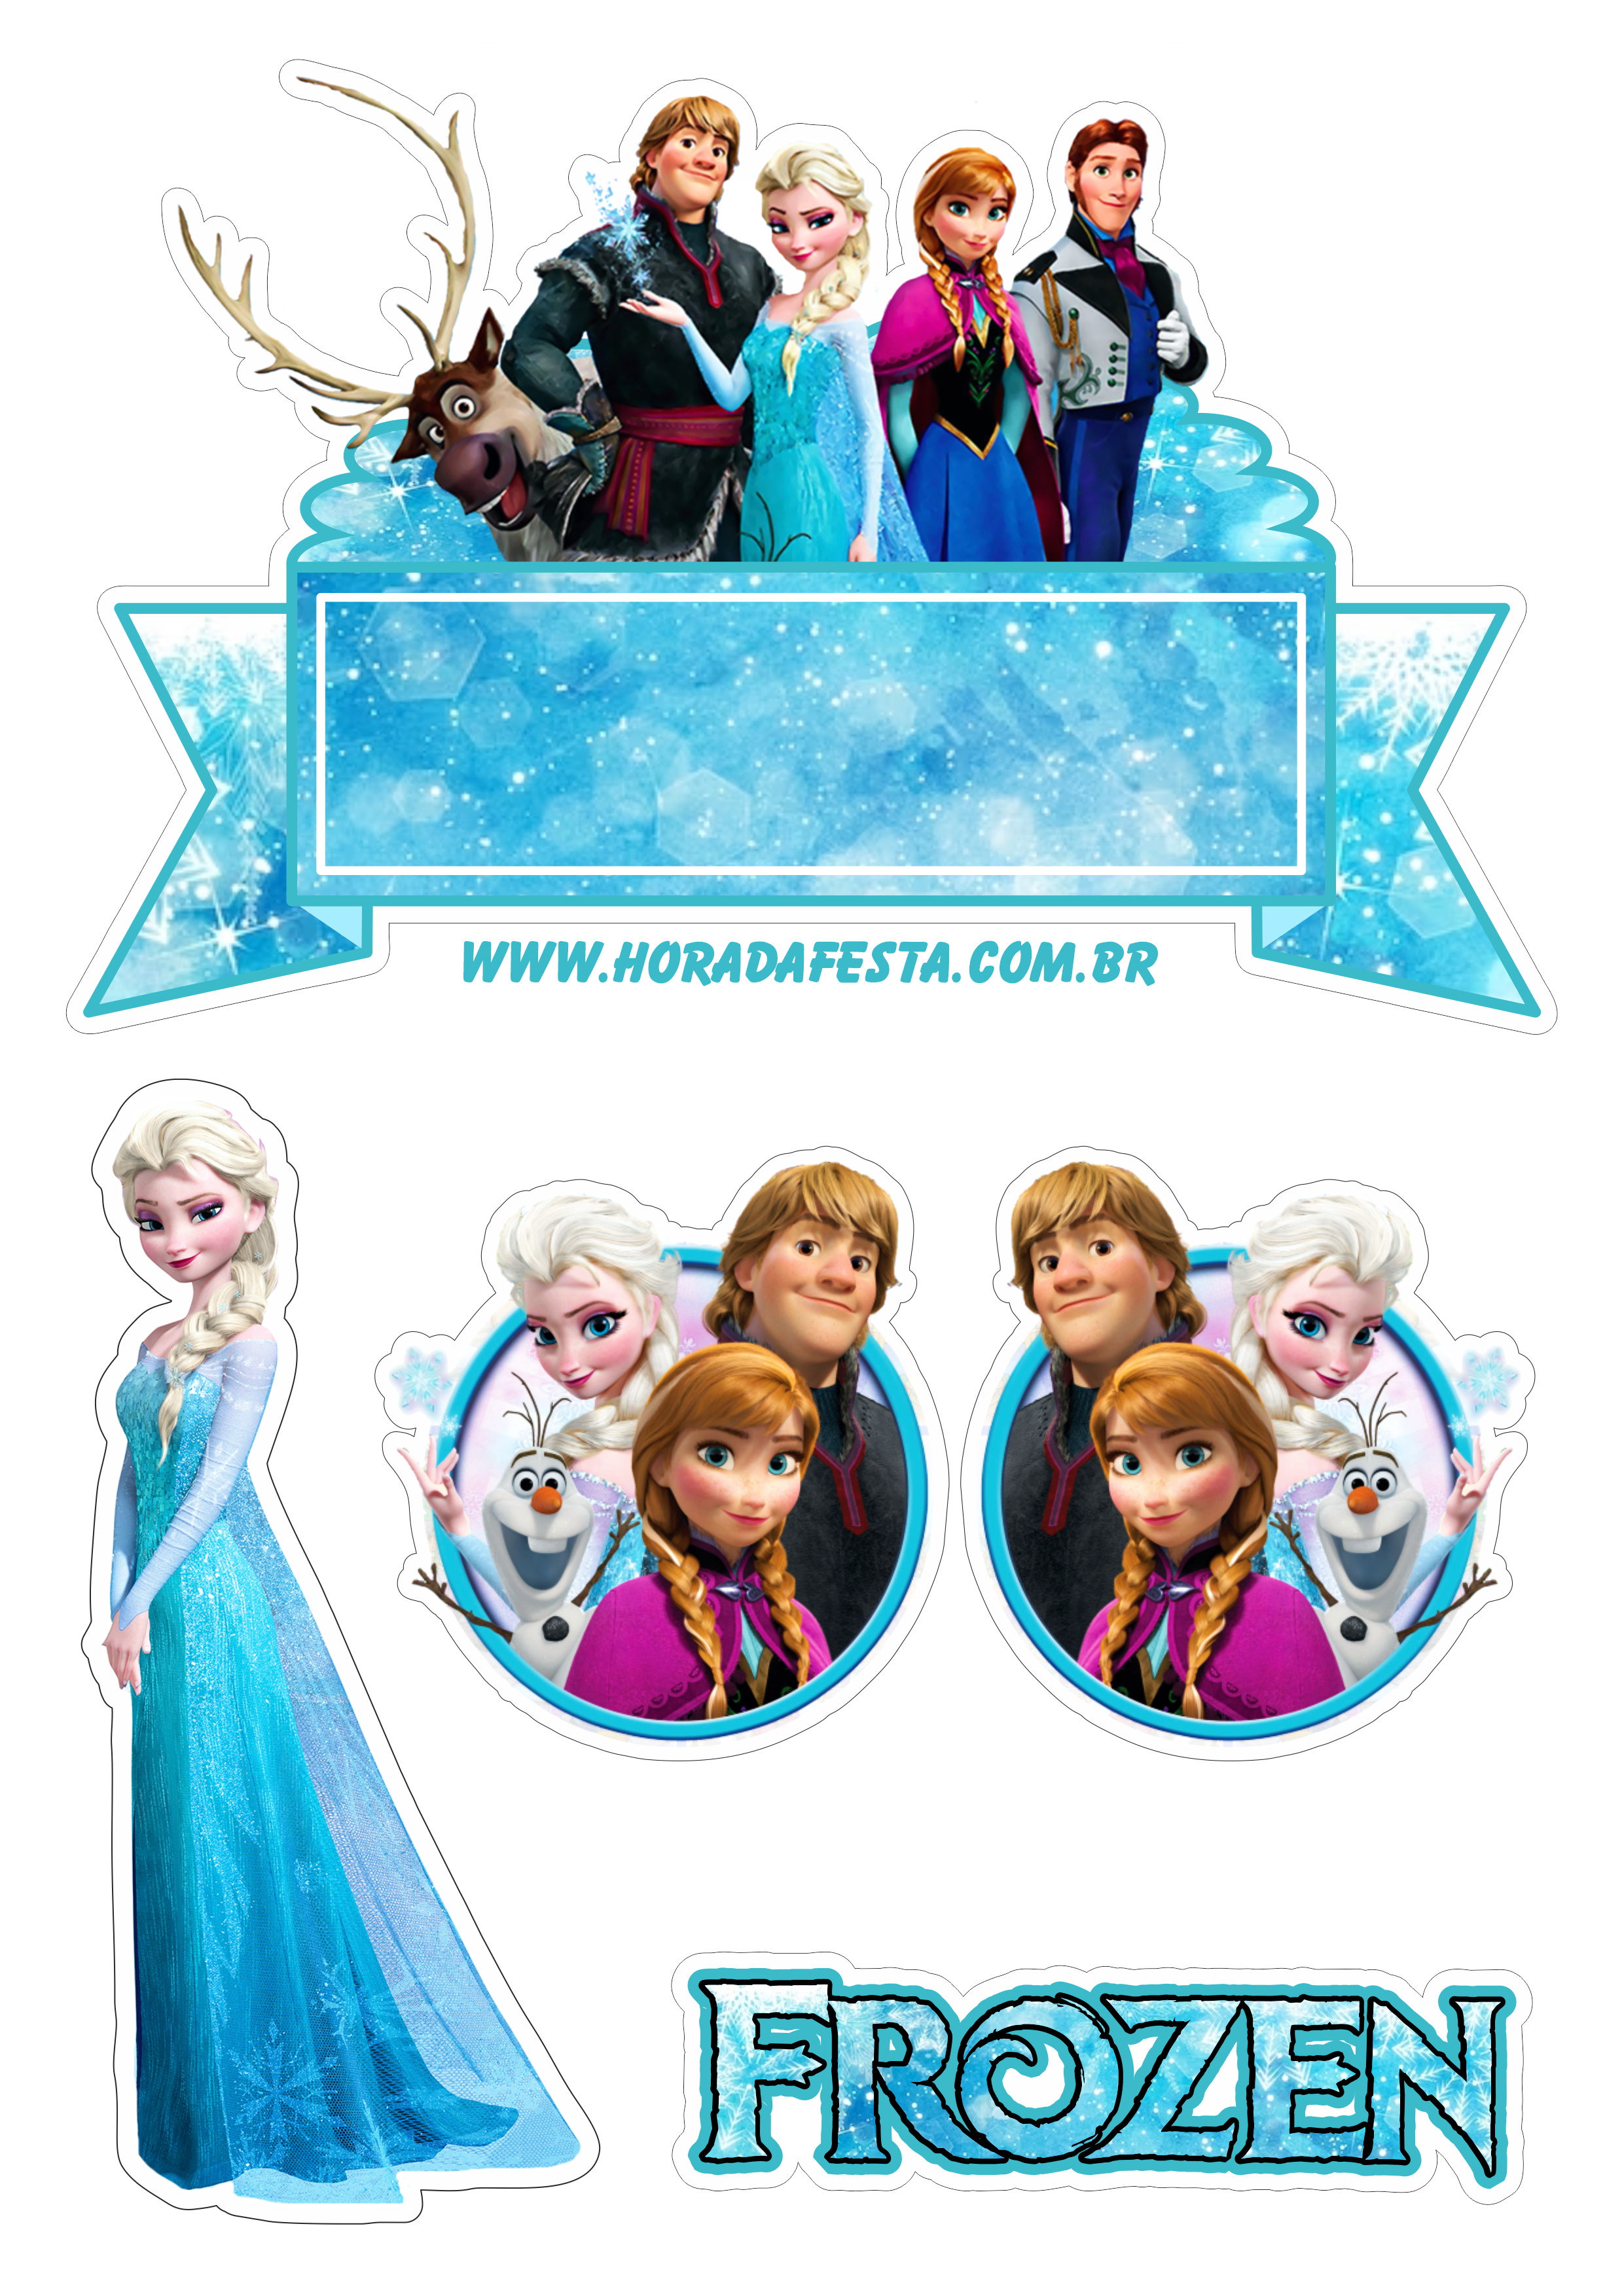 Frozen topo de bolo festa infantil personagens disney Elsa Anna Kristoff Sven e Olaf artes gráficas png